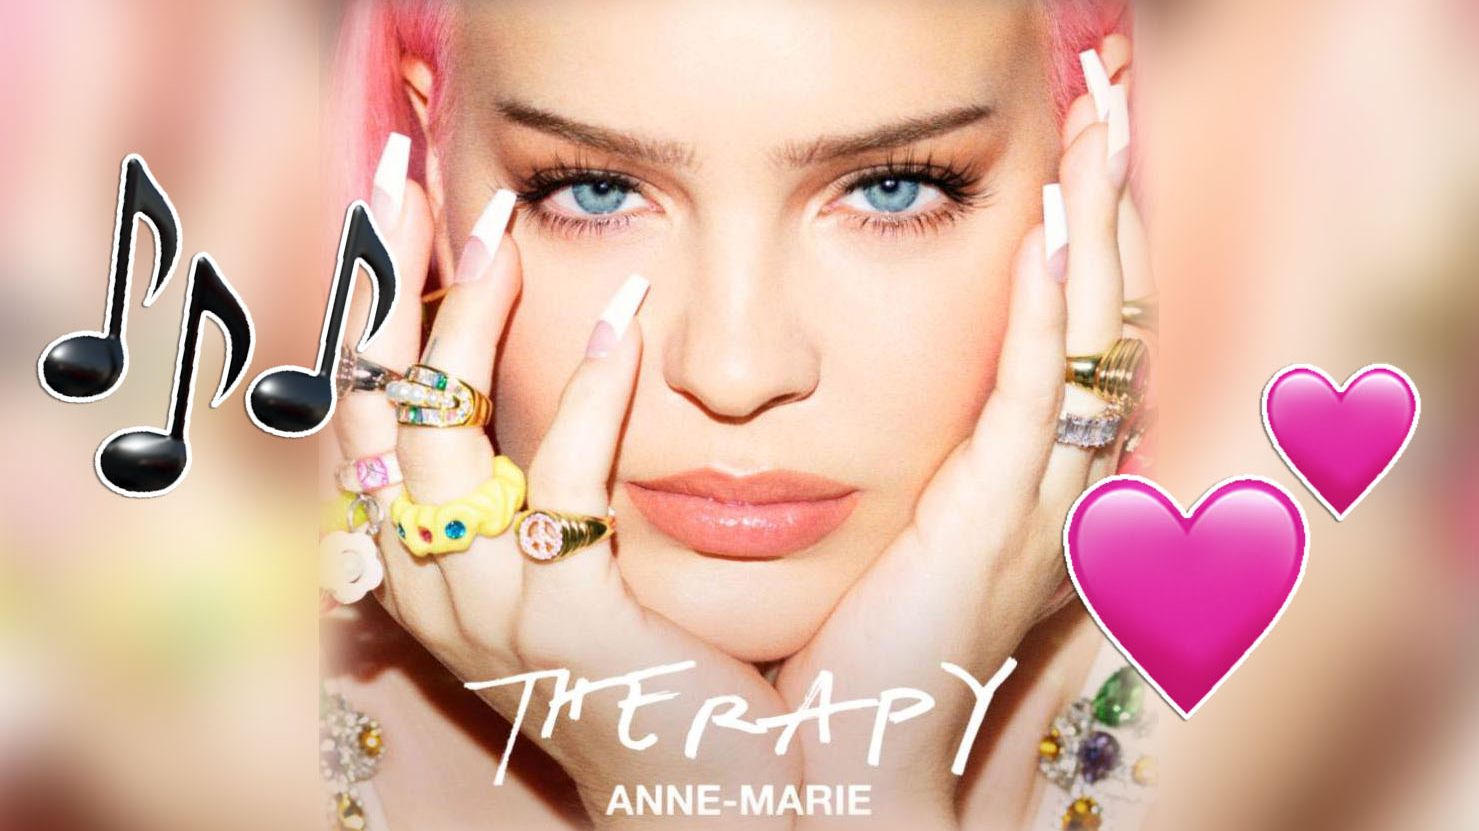 Kiss My (Uh-Oh)  Single/EP de Anne-Marie 